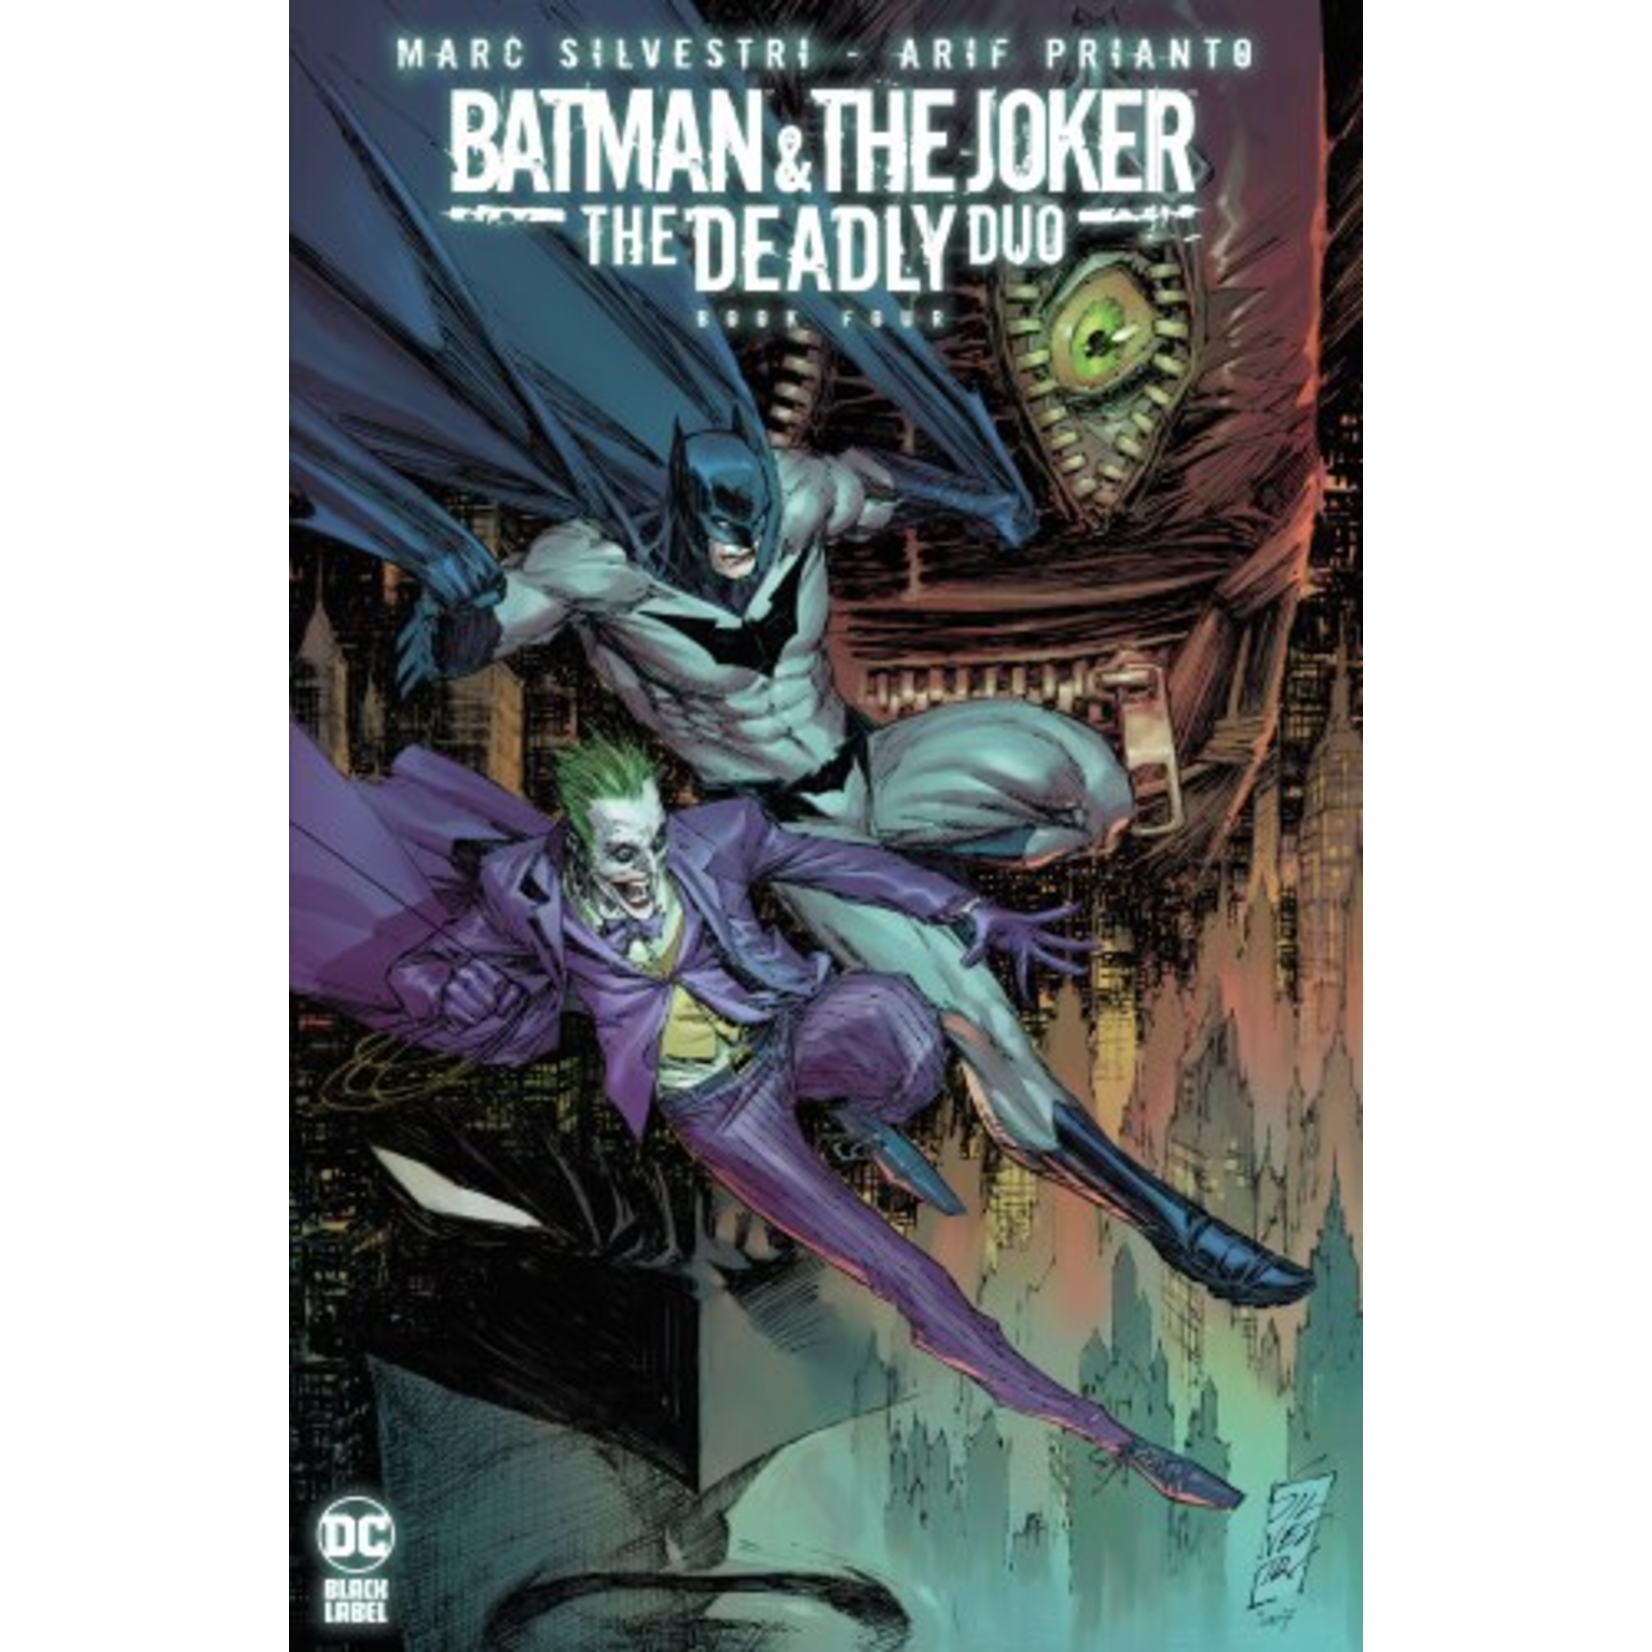 DC Comics BATMAN/JOKER THE DEADLY DUO #4 - ARKHAM CAFÉ COOP